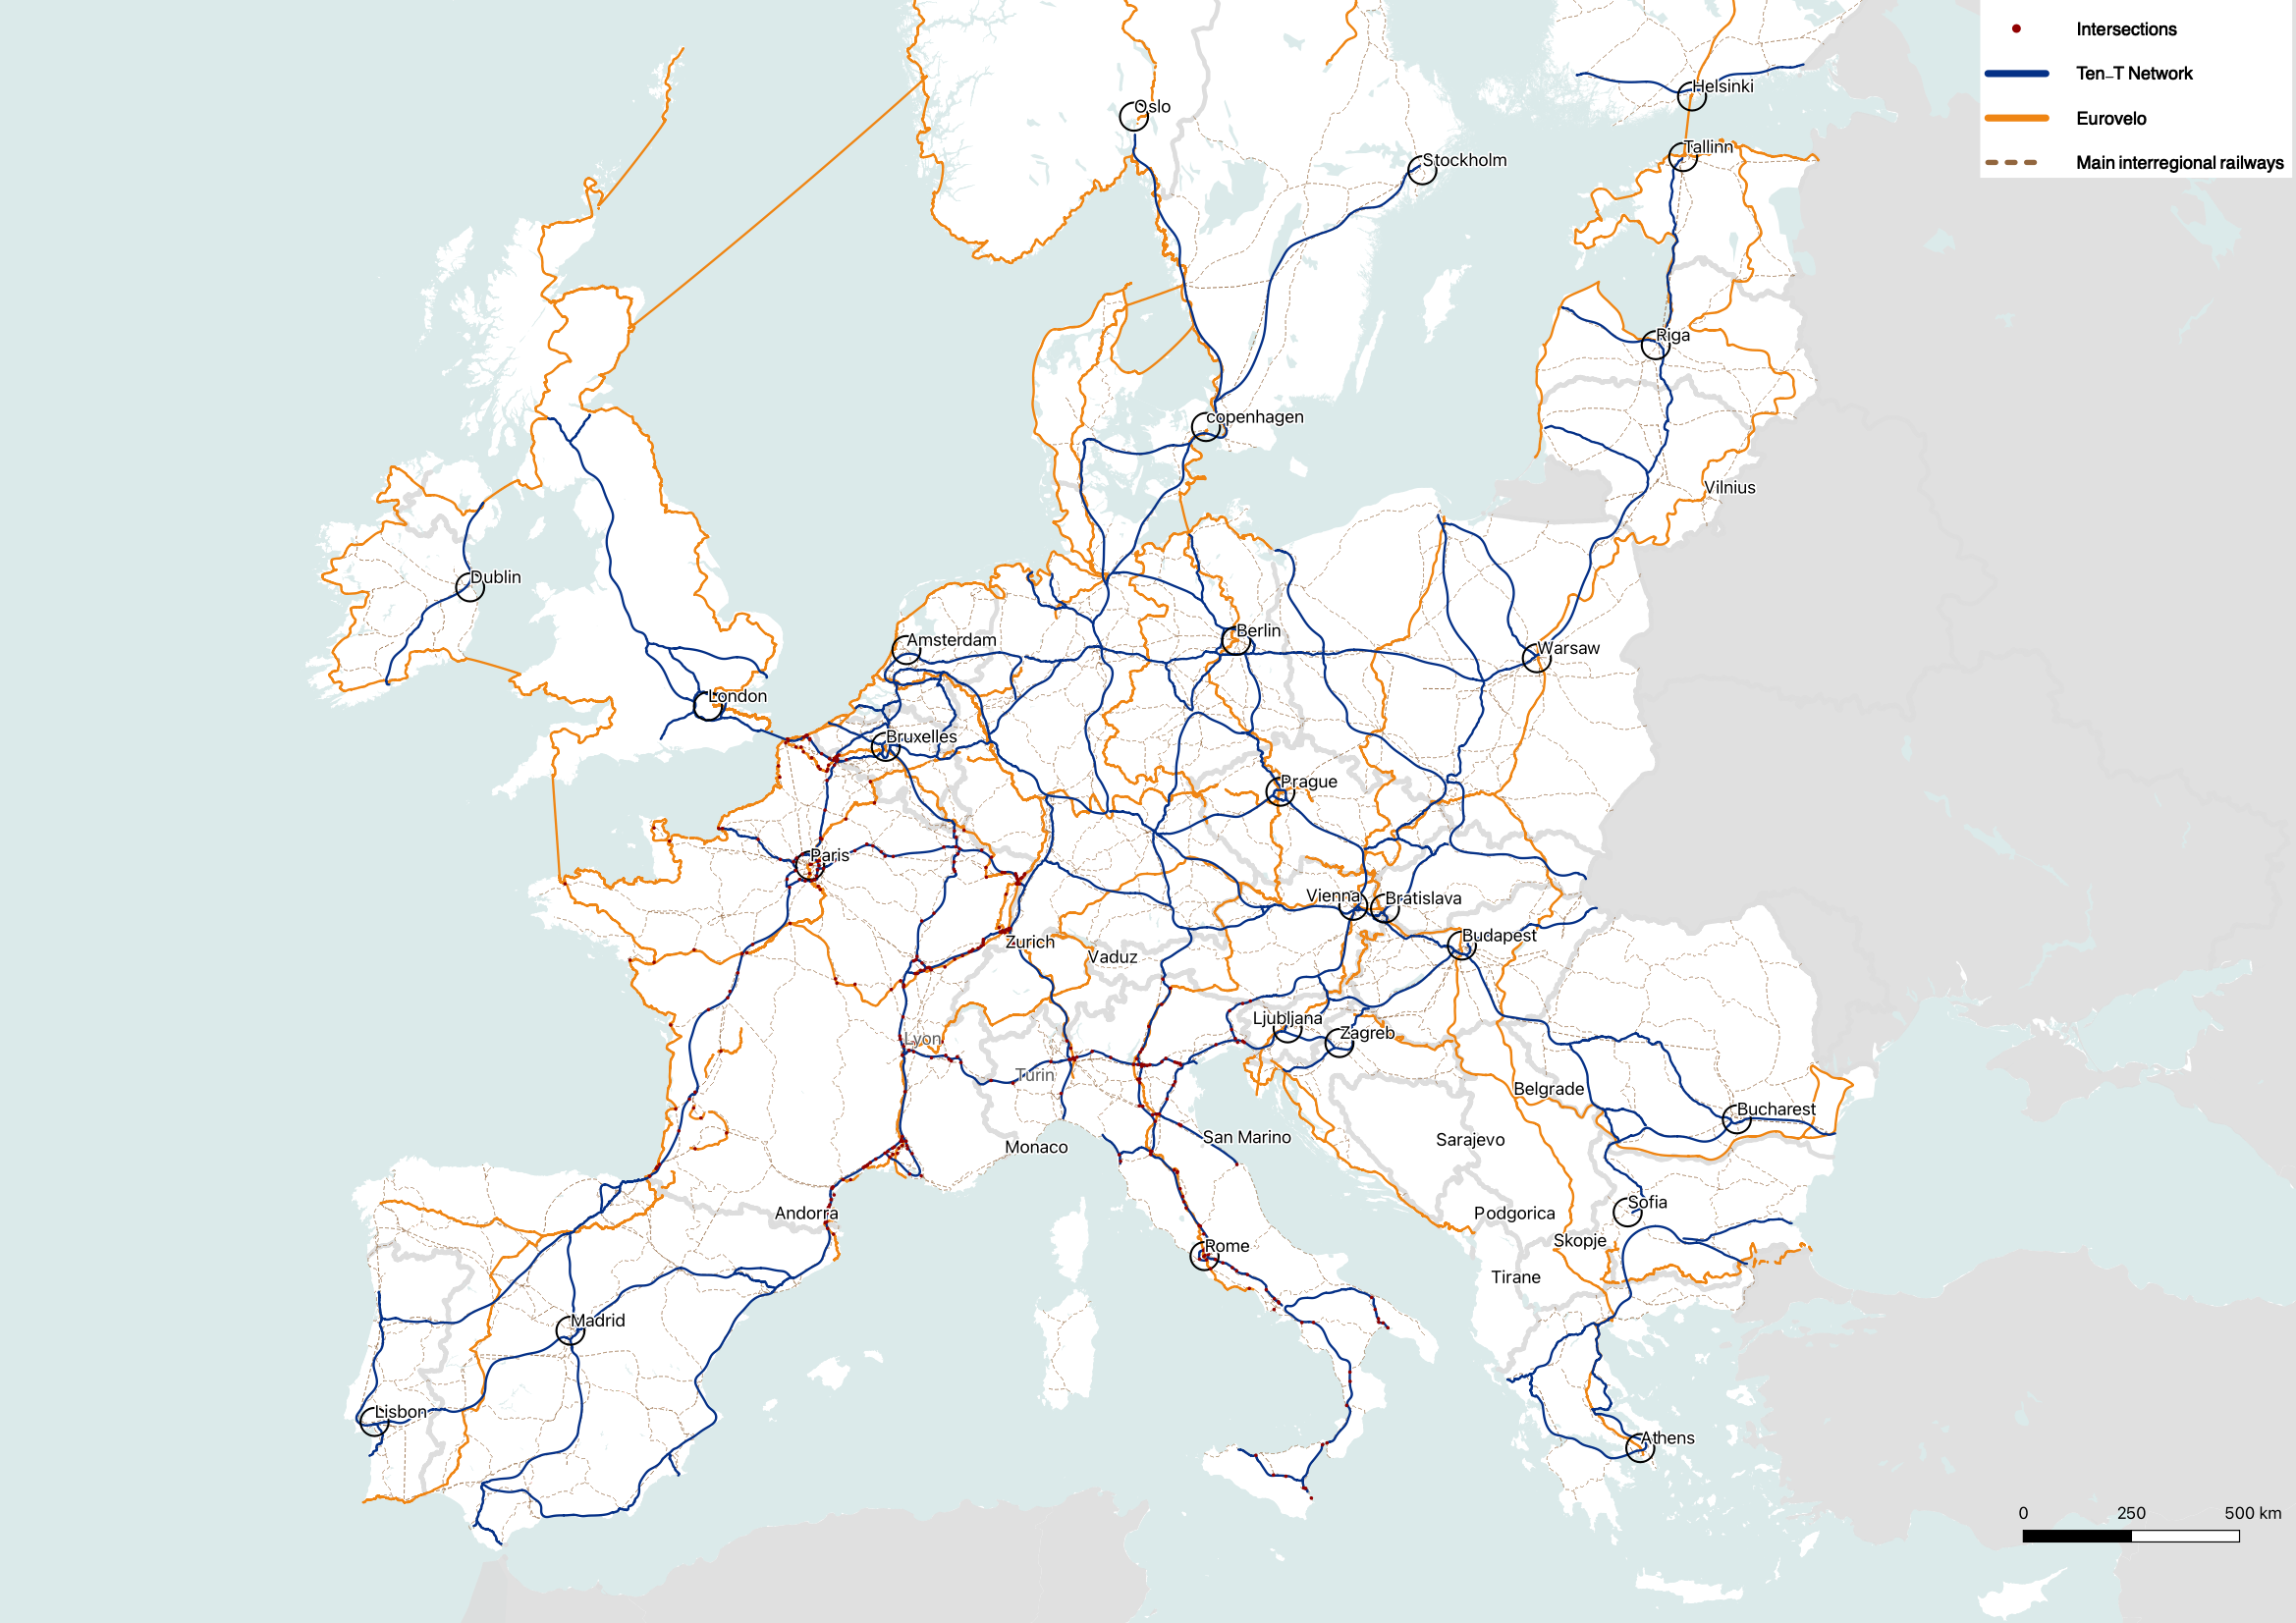 Smartland: Europe scale